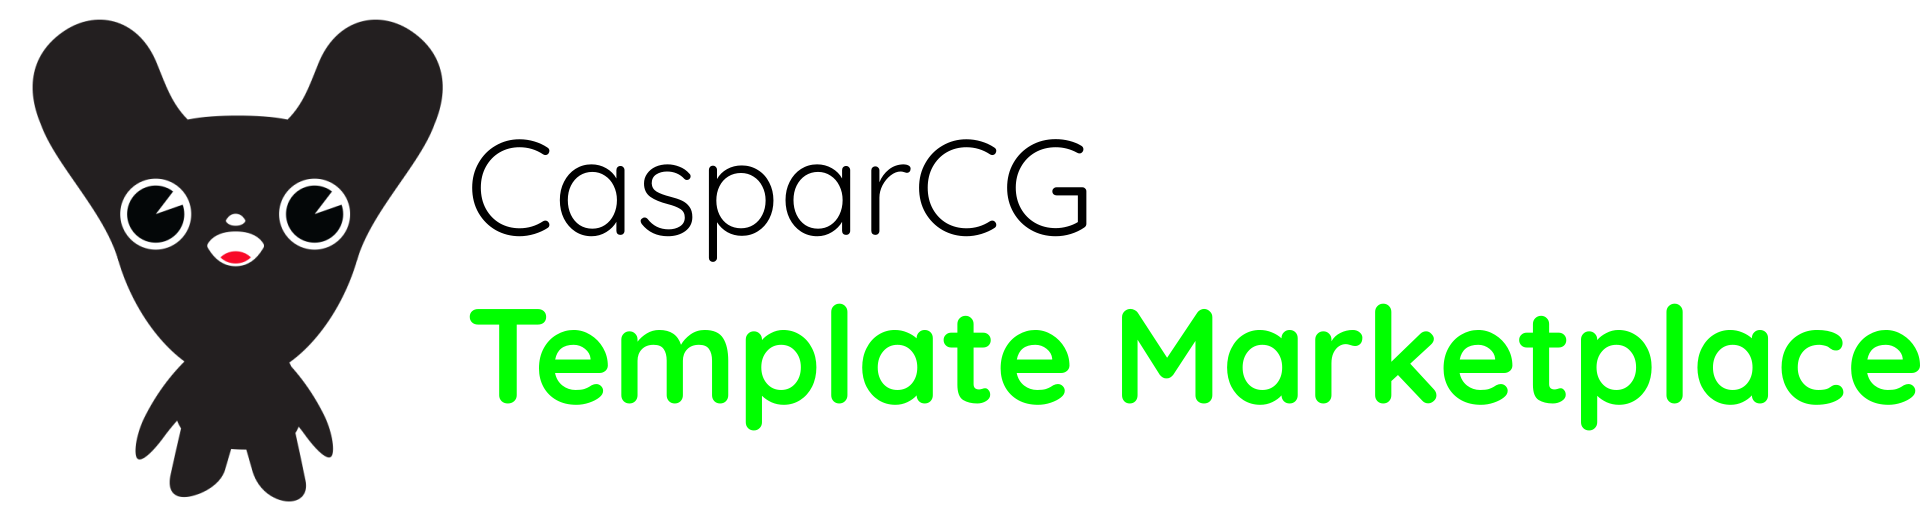 Template Marketplace logo